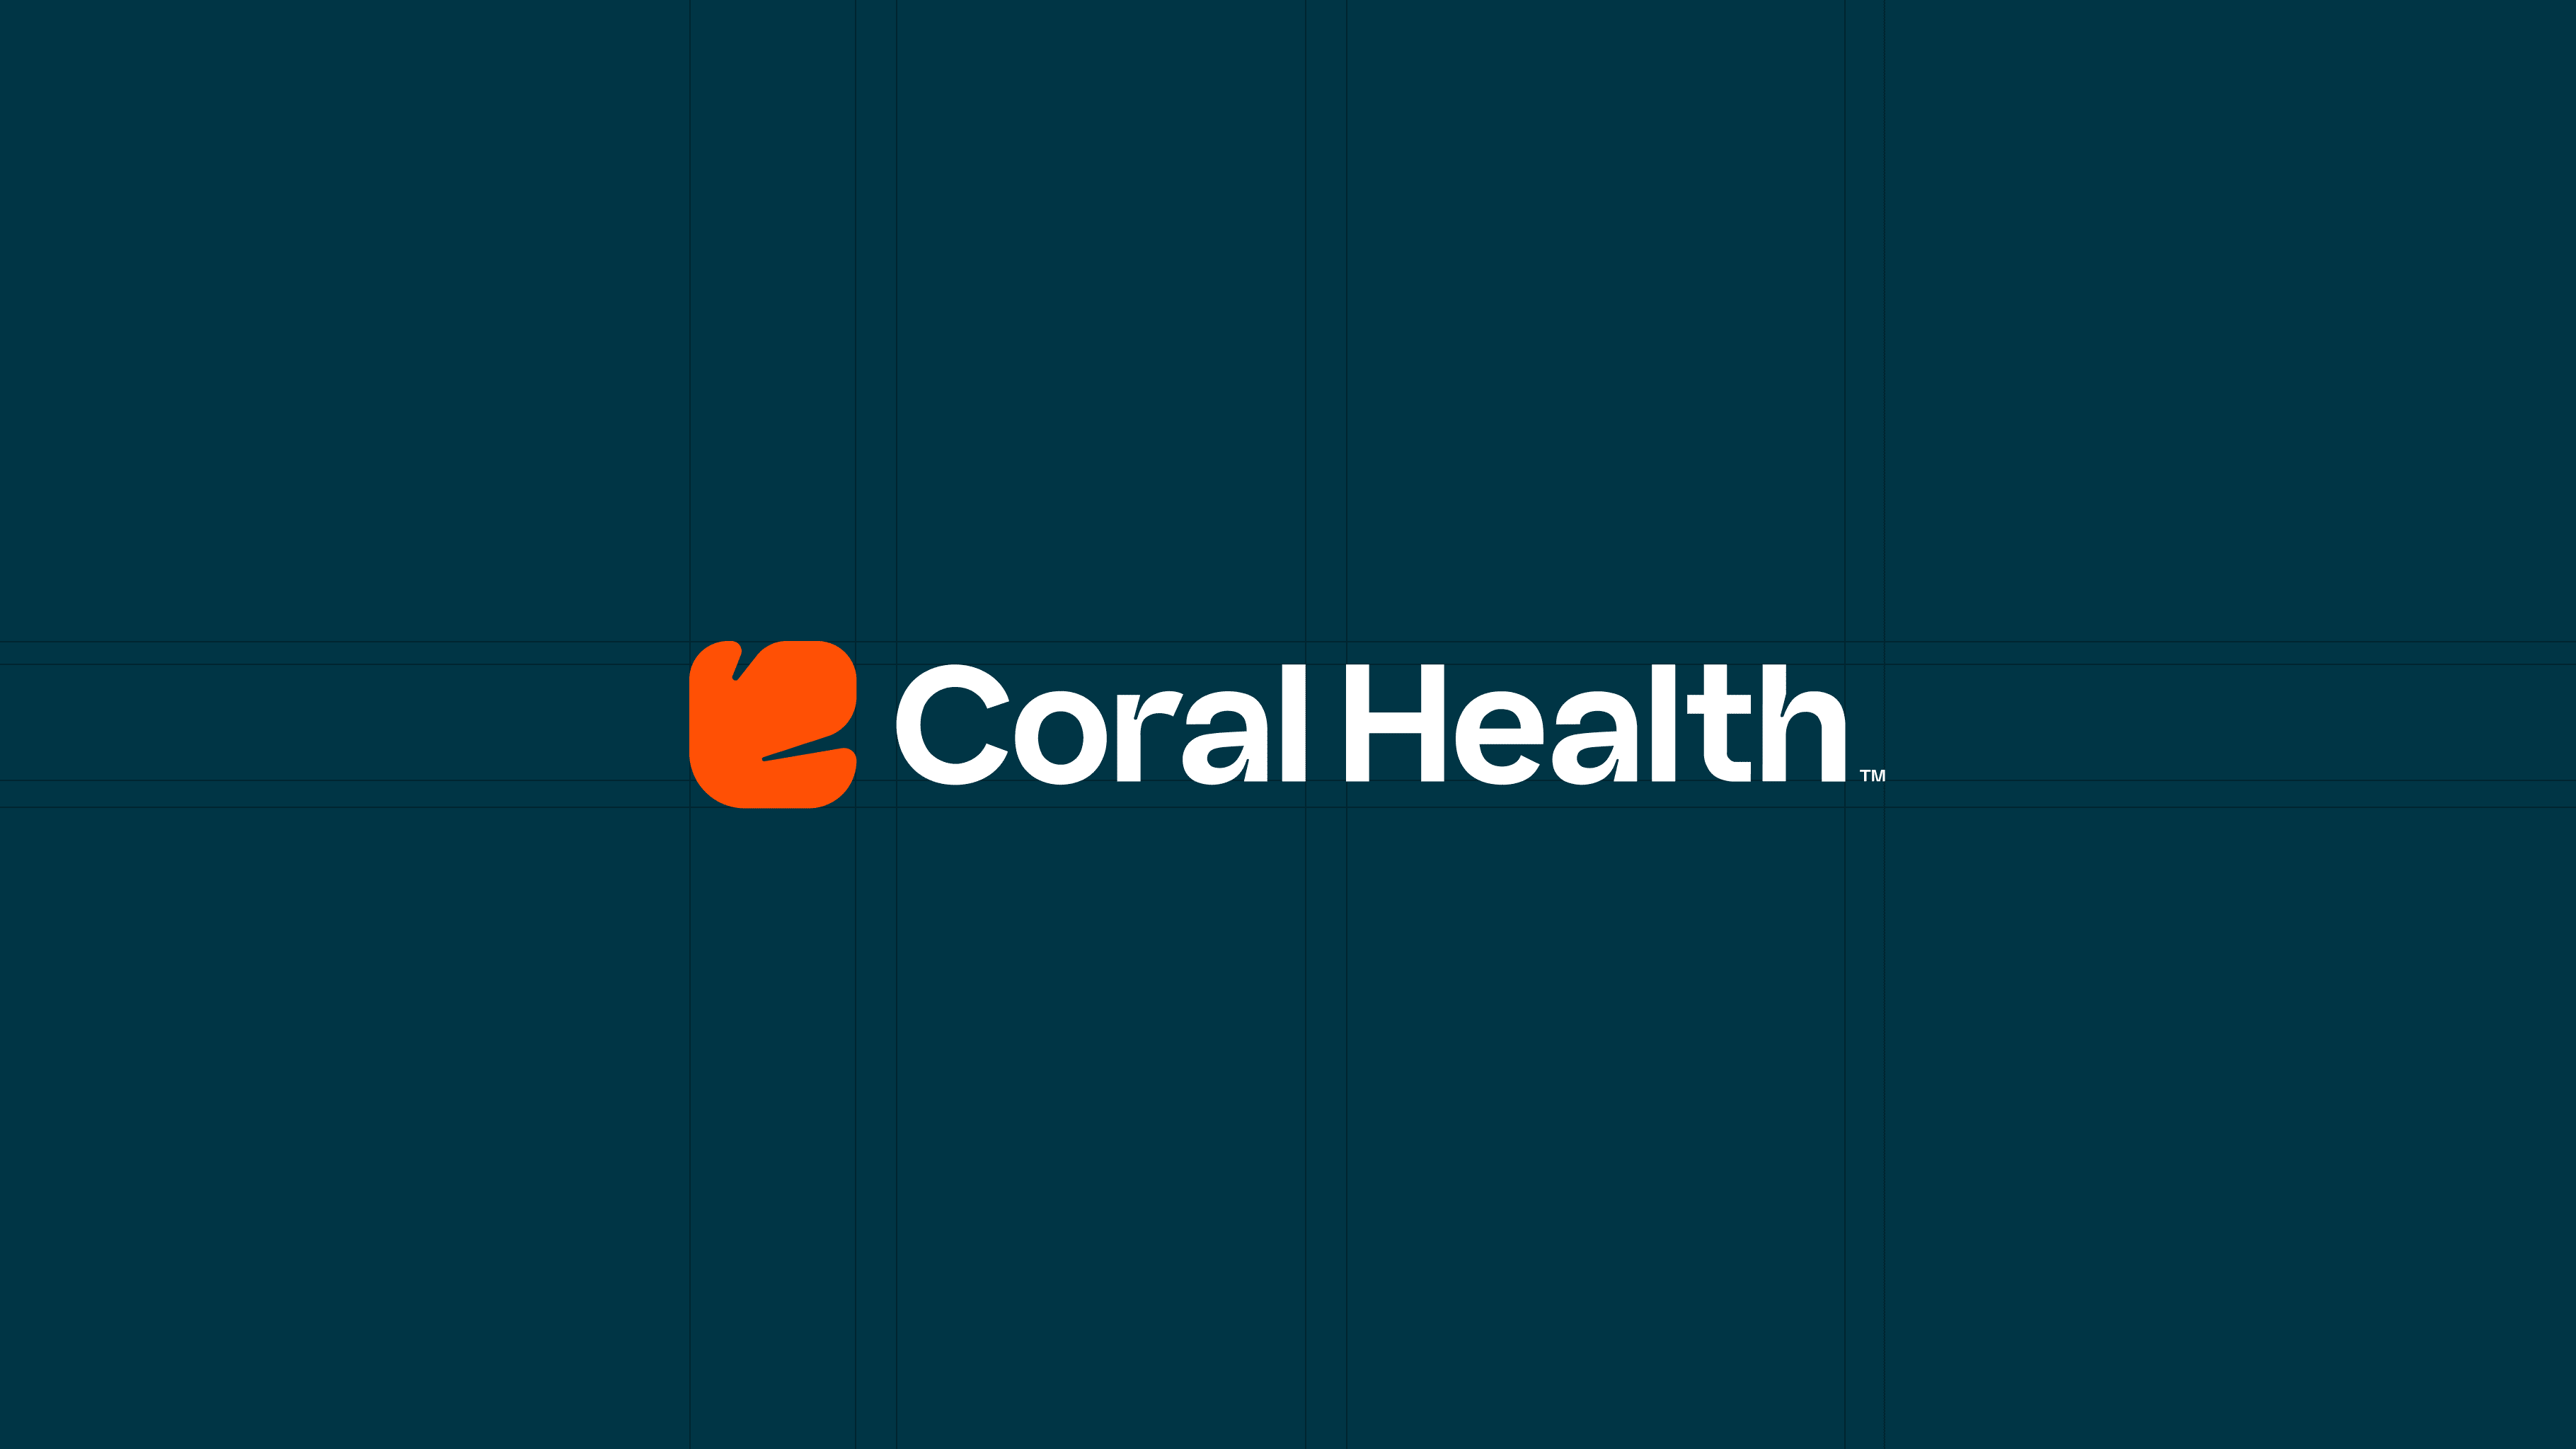 Coral Health logo on blue